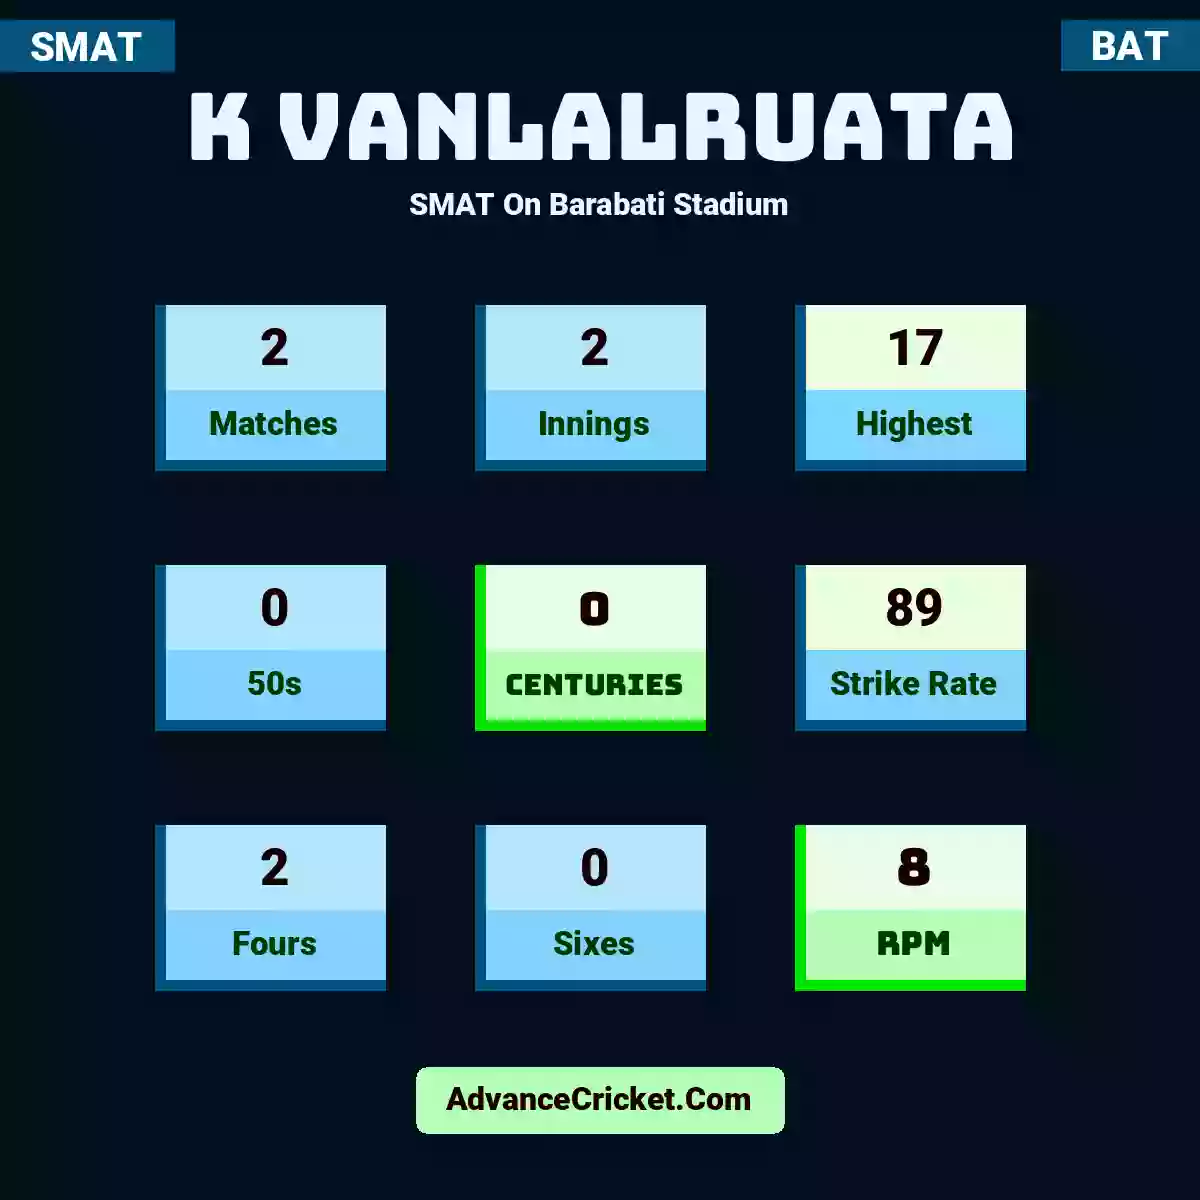 K Vanlalruata SMAT  On Barabati Stadium, K Vanlalruata played 2 matches, scored 17 runs as highest, 0 half-centuries, and 0 centuries, with a strike rate of 89. K.Vanlalruata hit 2 fours and 0 sixes, with an RPM of 8.